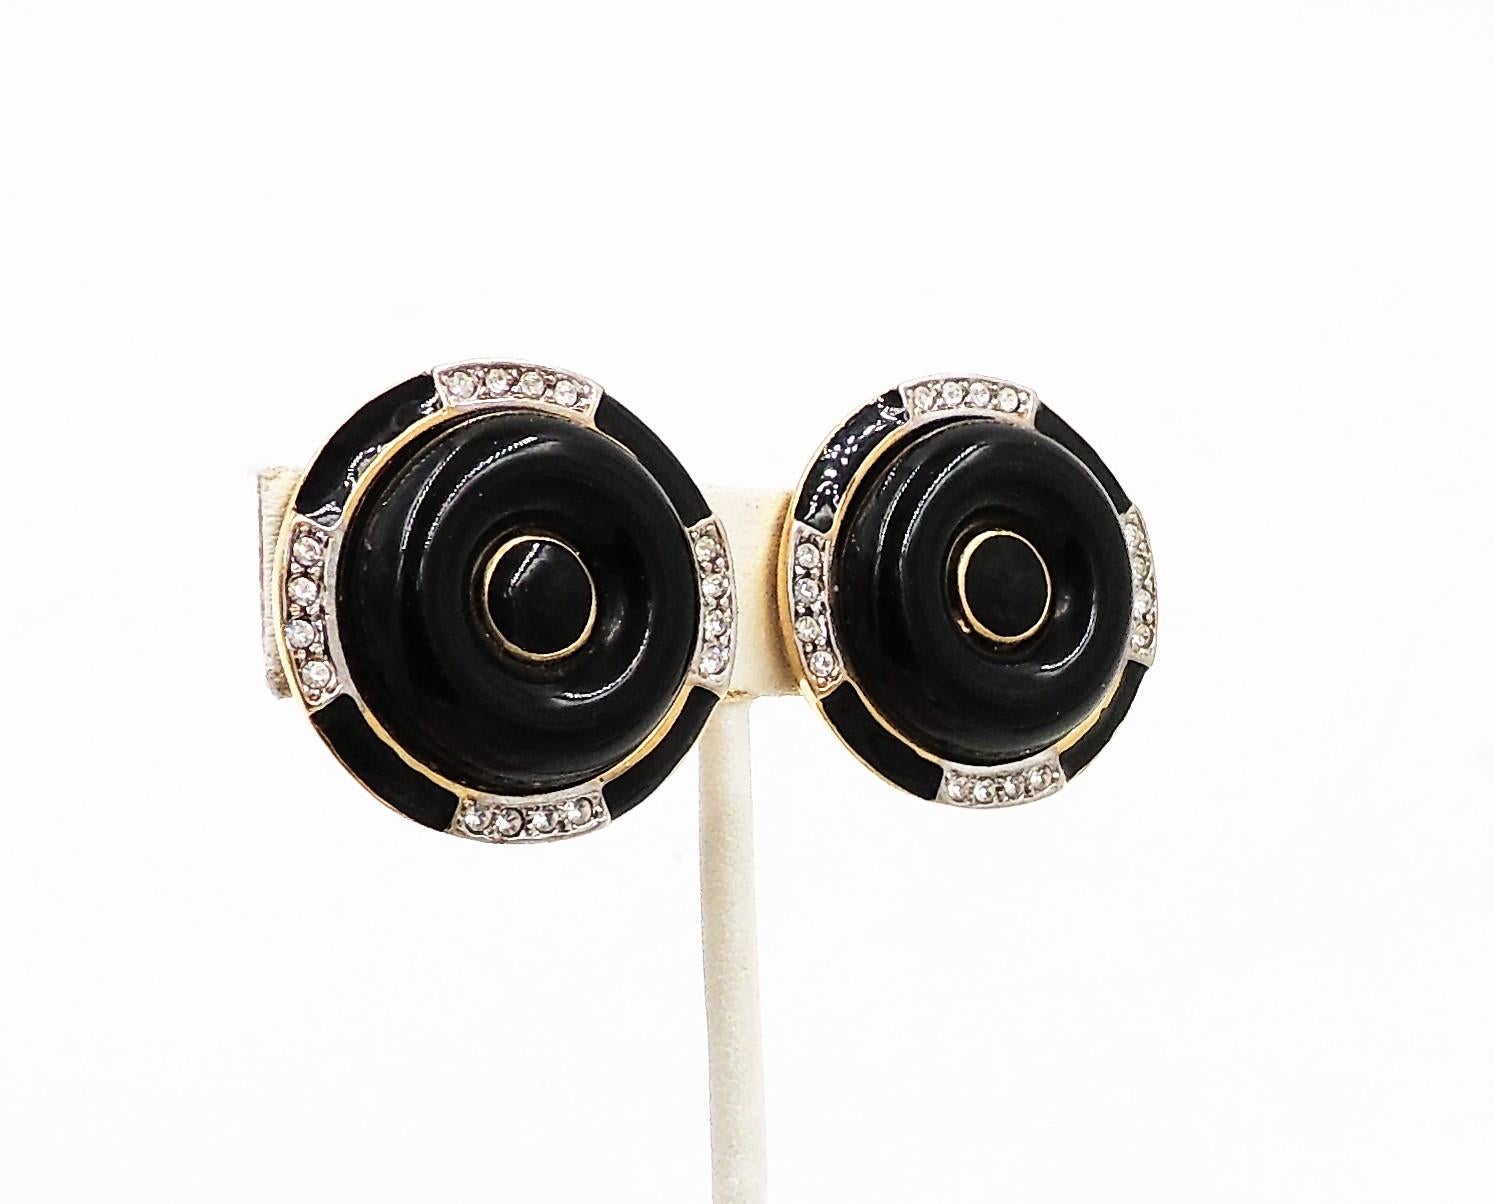 1980s art deco style round goldtone faux-onyx rhinestone, black enamel and clear rhinestone clip back earrings. Marked 